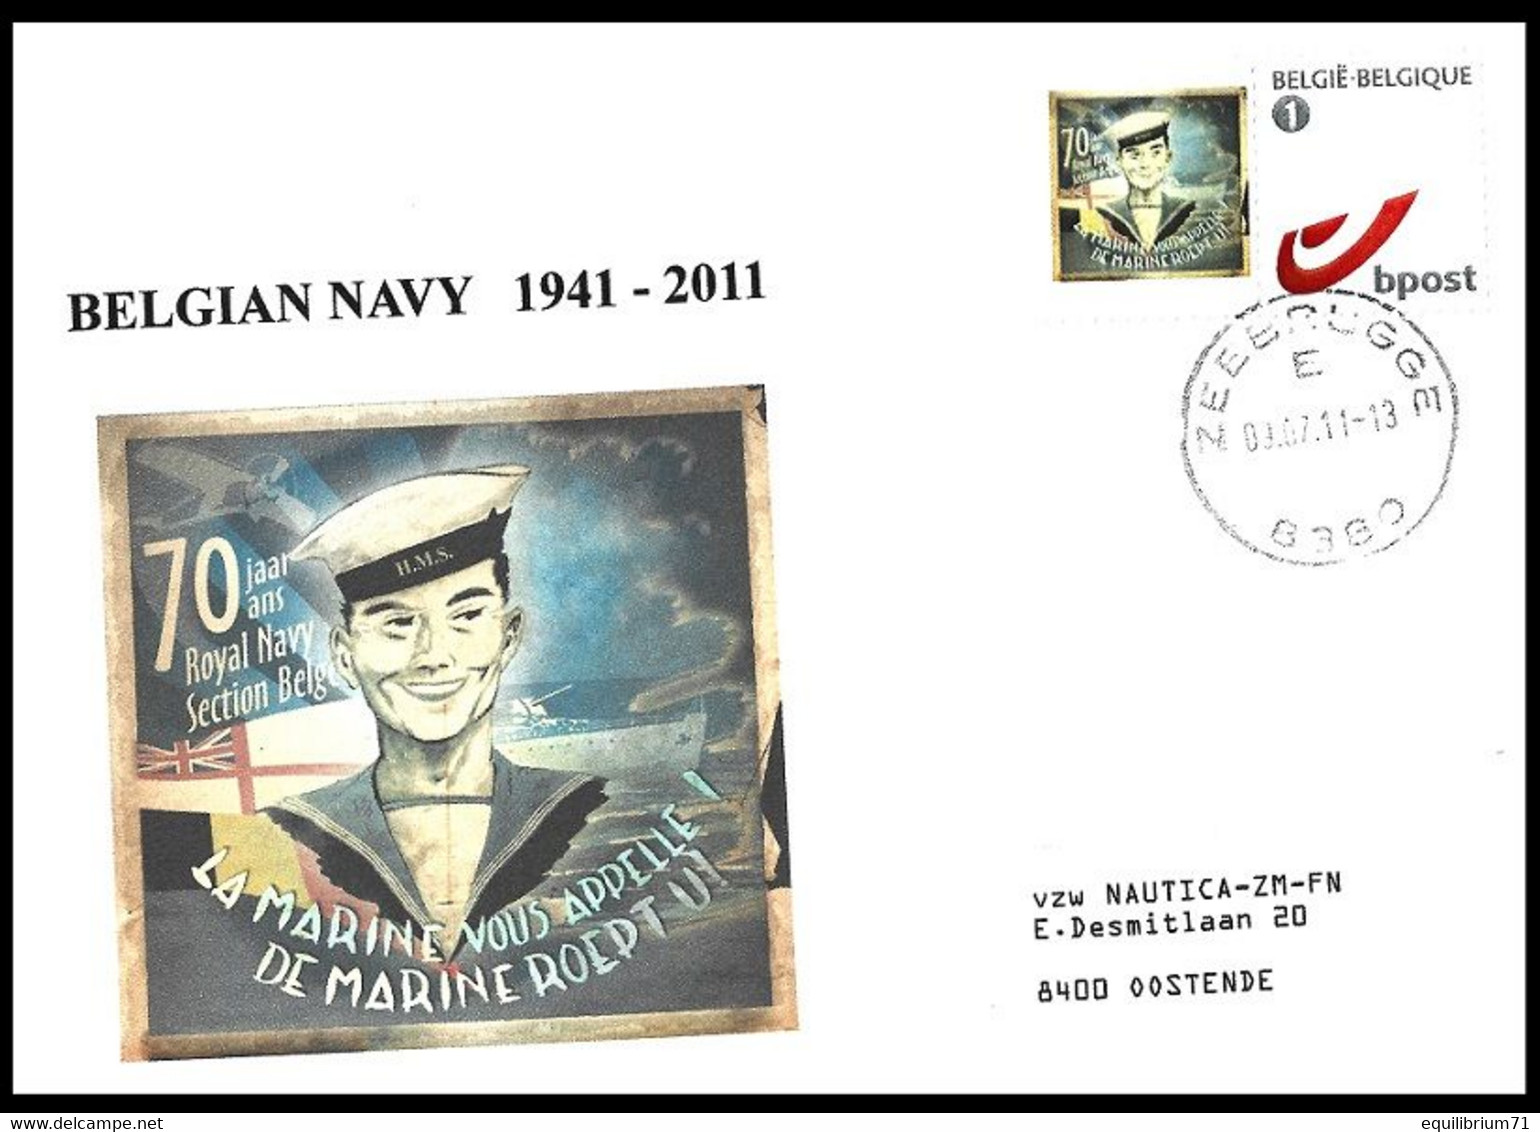 DUOSTAMP ° / MYSTAMP° - Enveloppe Souvenir / Herdenkingsomslag - BELGIAN Navy - 1941-2011 - 09-07-2011 - Covers & Documents